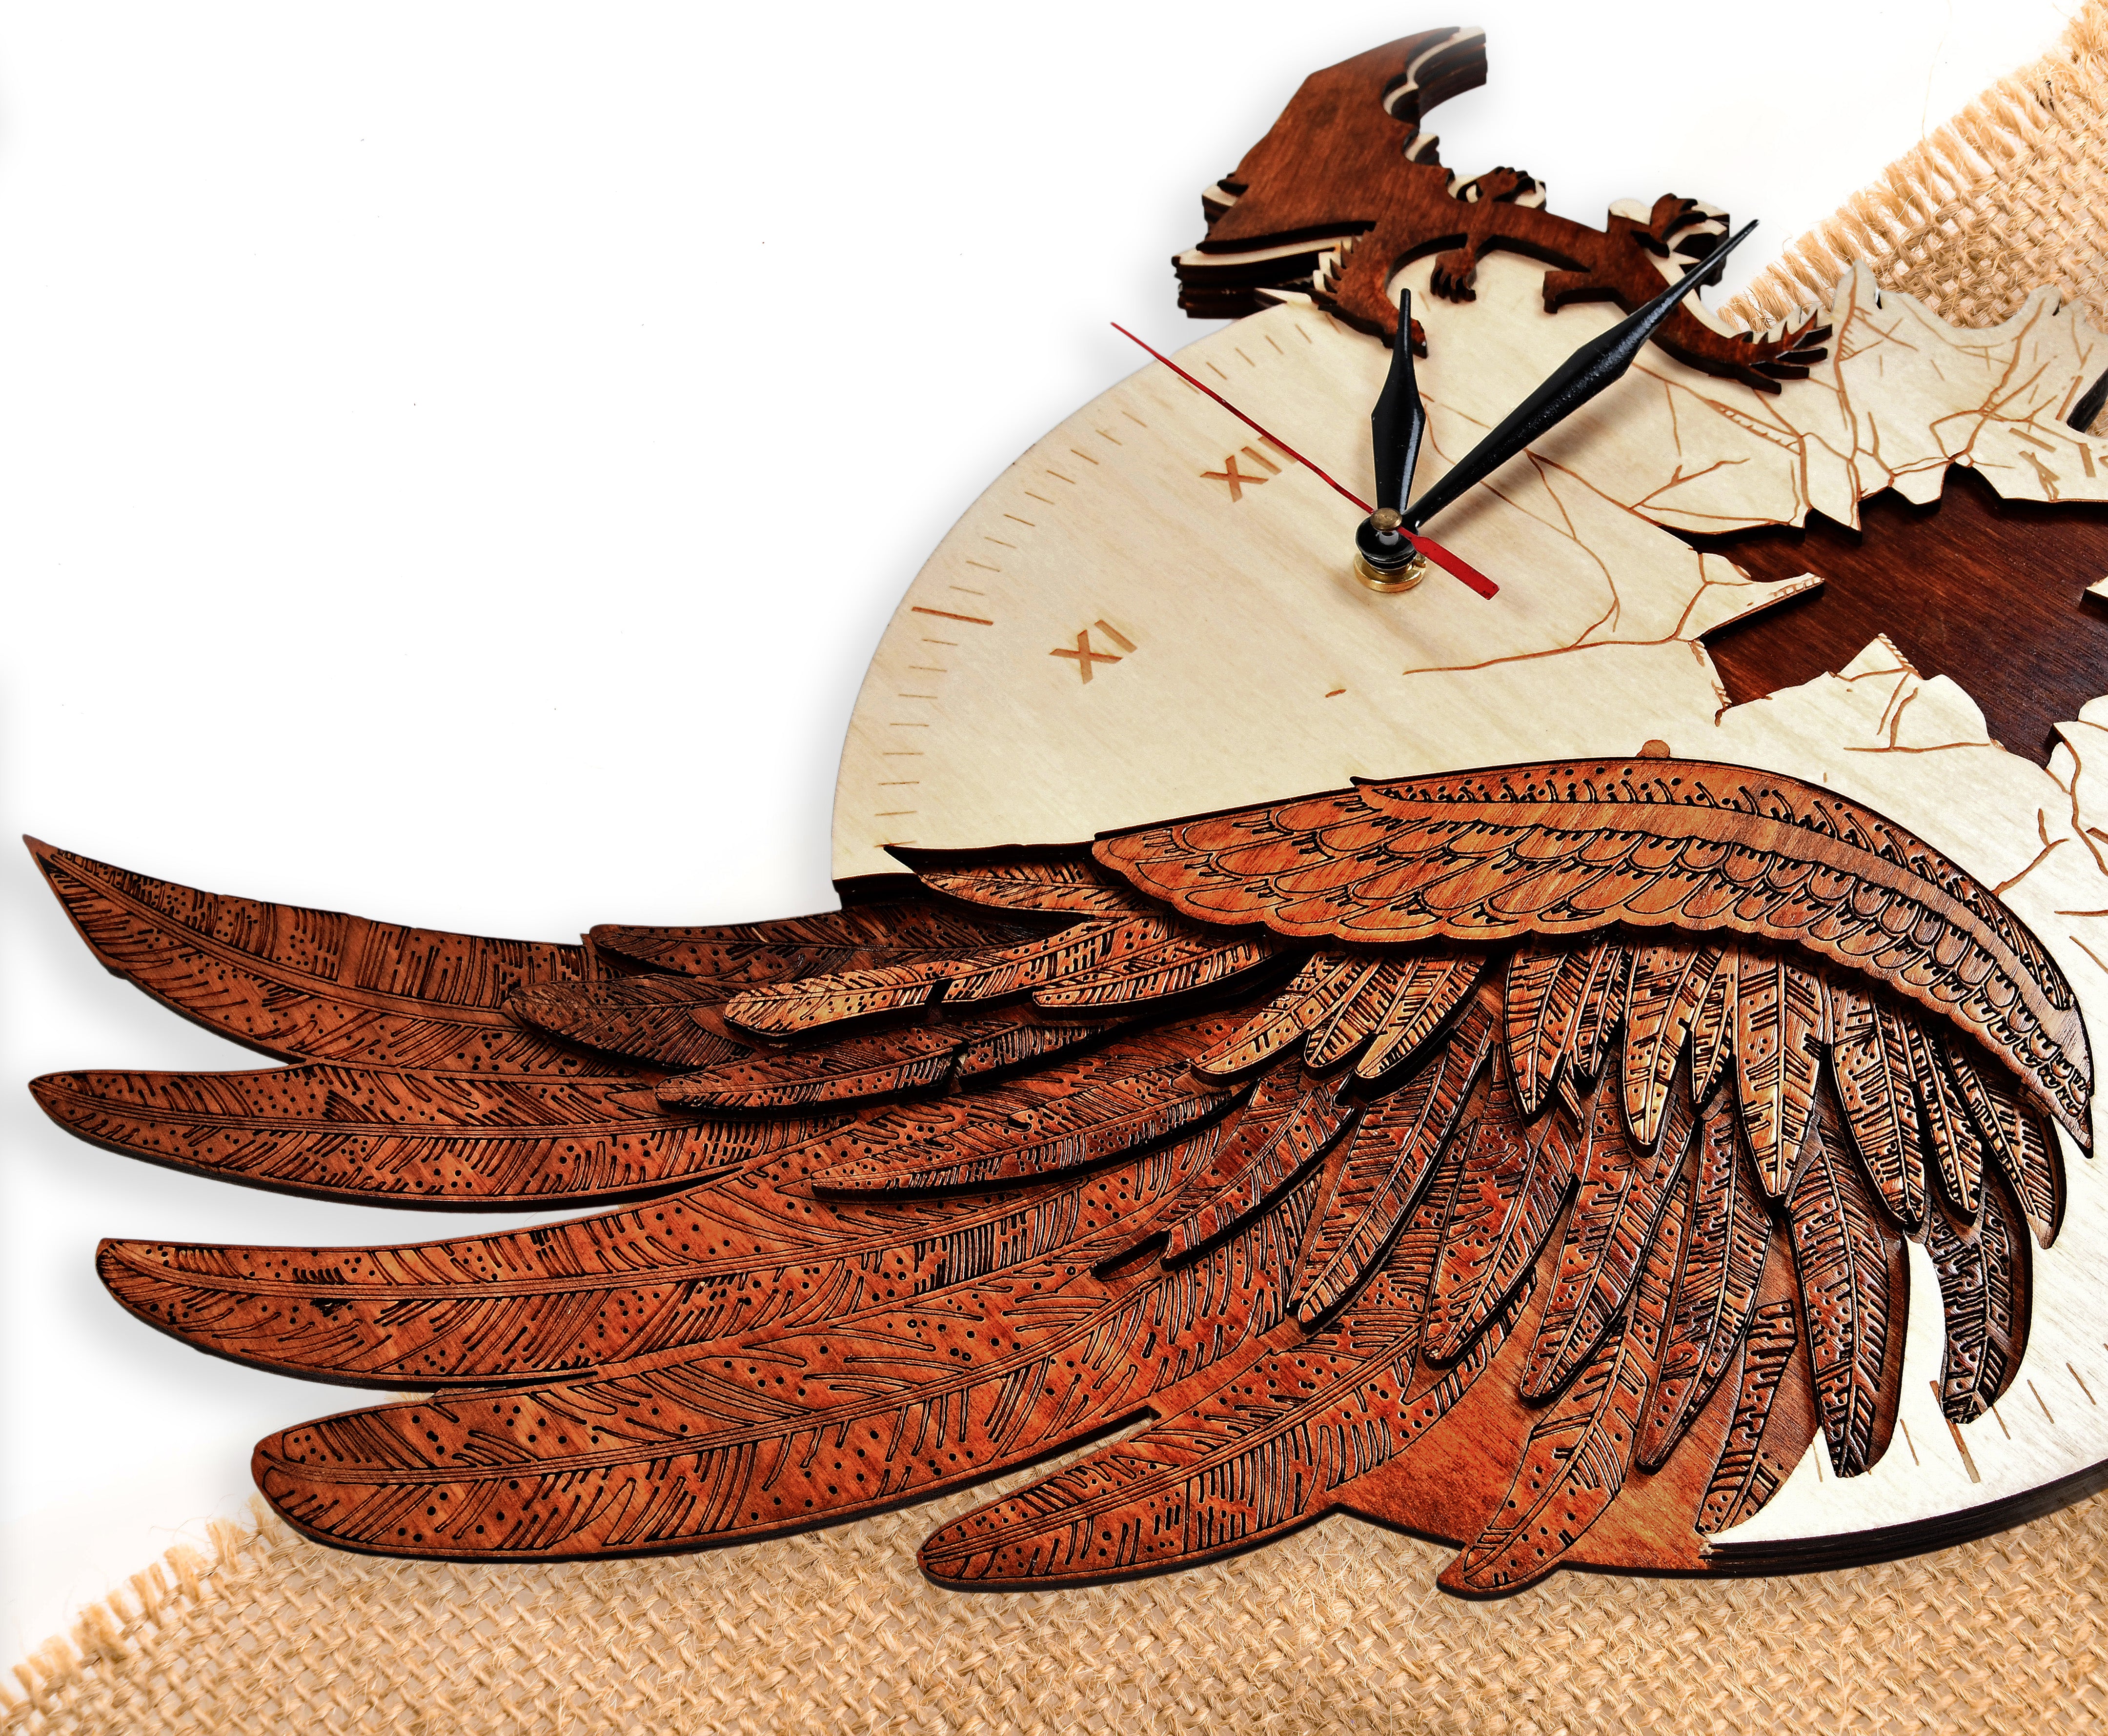 Time flies - Qreative Qick Wall Clock | Wooden Wall Art | Vintage Clocks | Clocks to Gift | Modern Clock | Wooden Clocks|Decor |Dragon clock